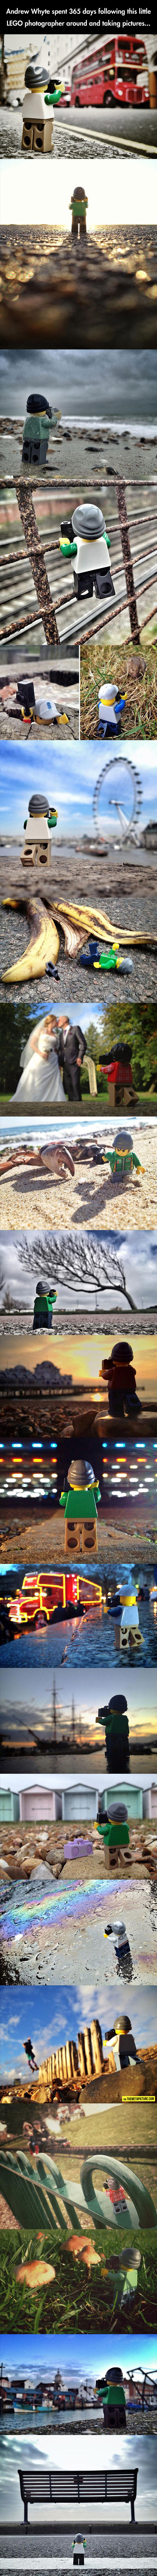 cool-Lego-photographer-world-travel